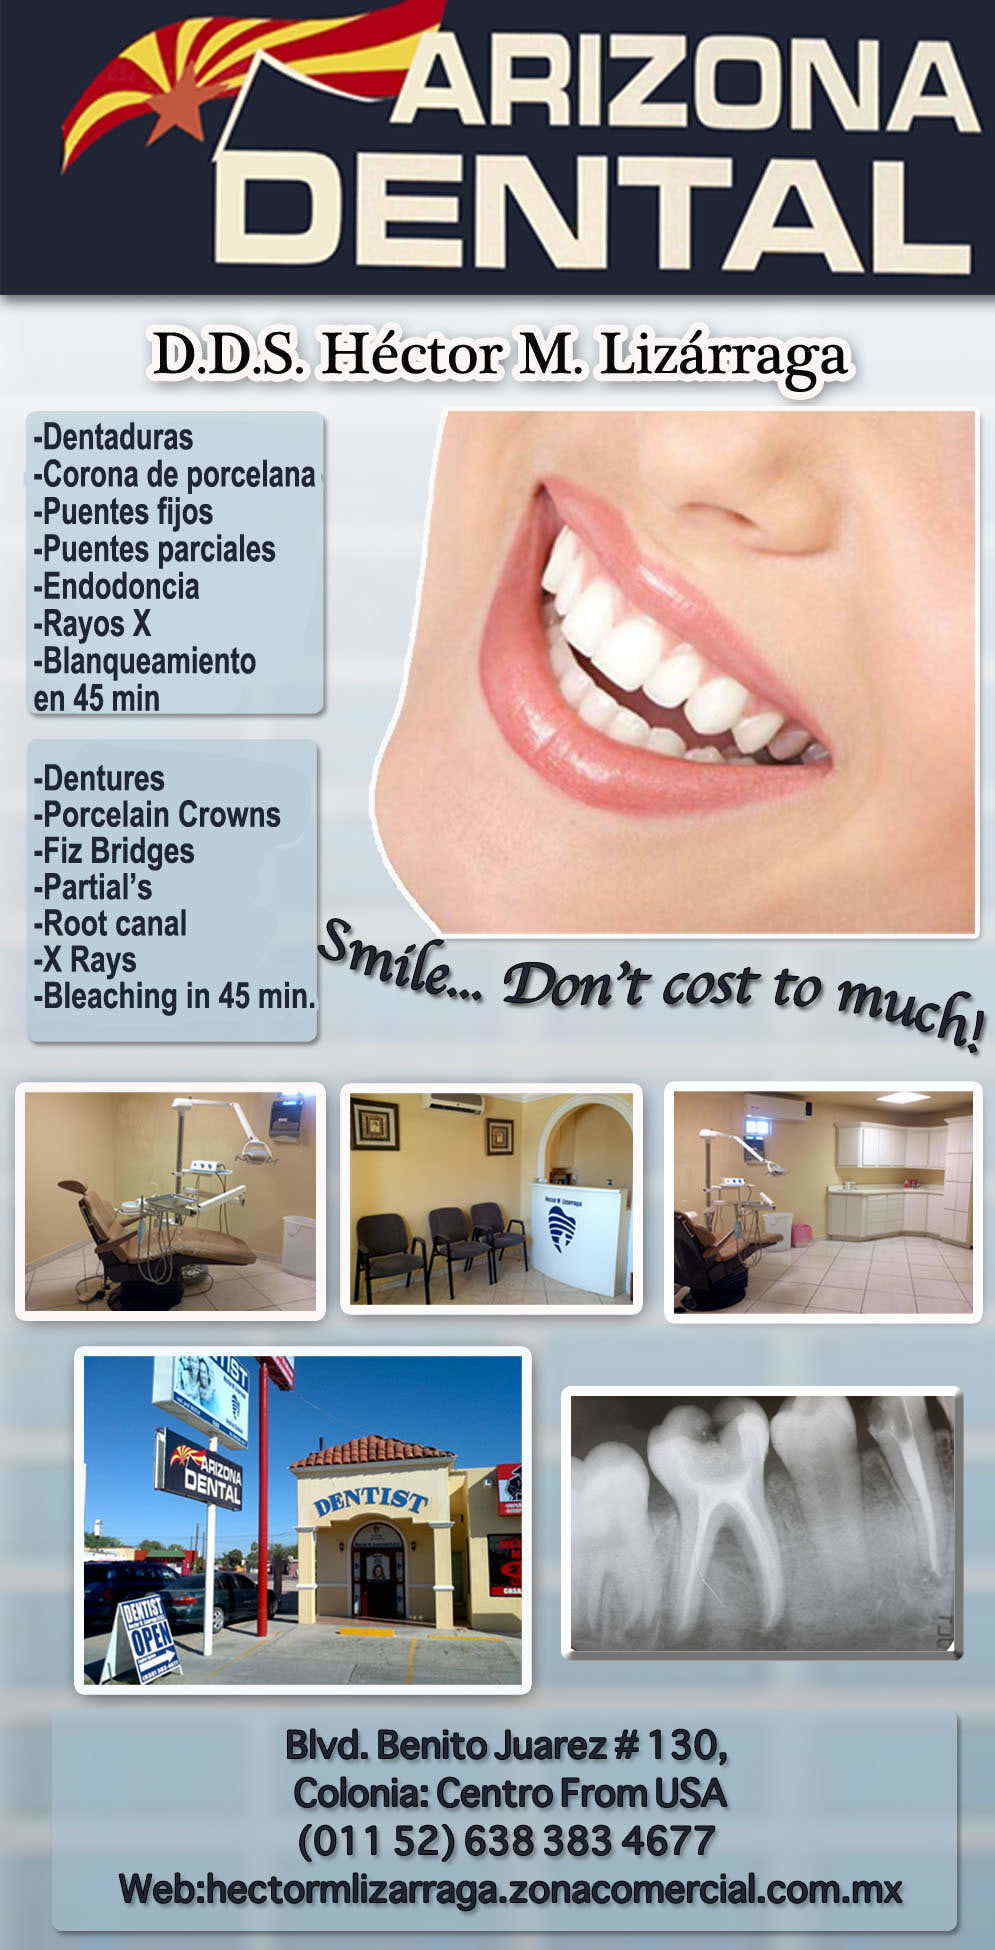 Arizona Dental DDS. Hector M. Lizarraga-Odontologia Familiar    